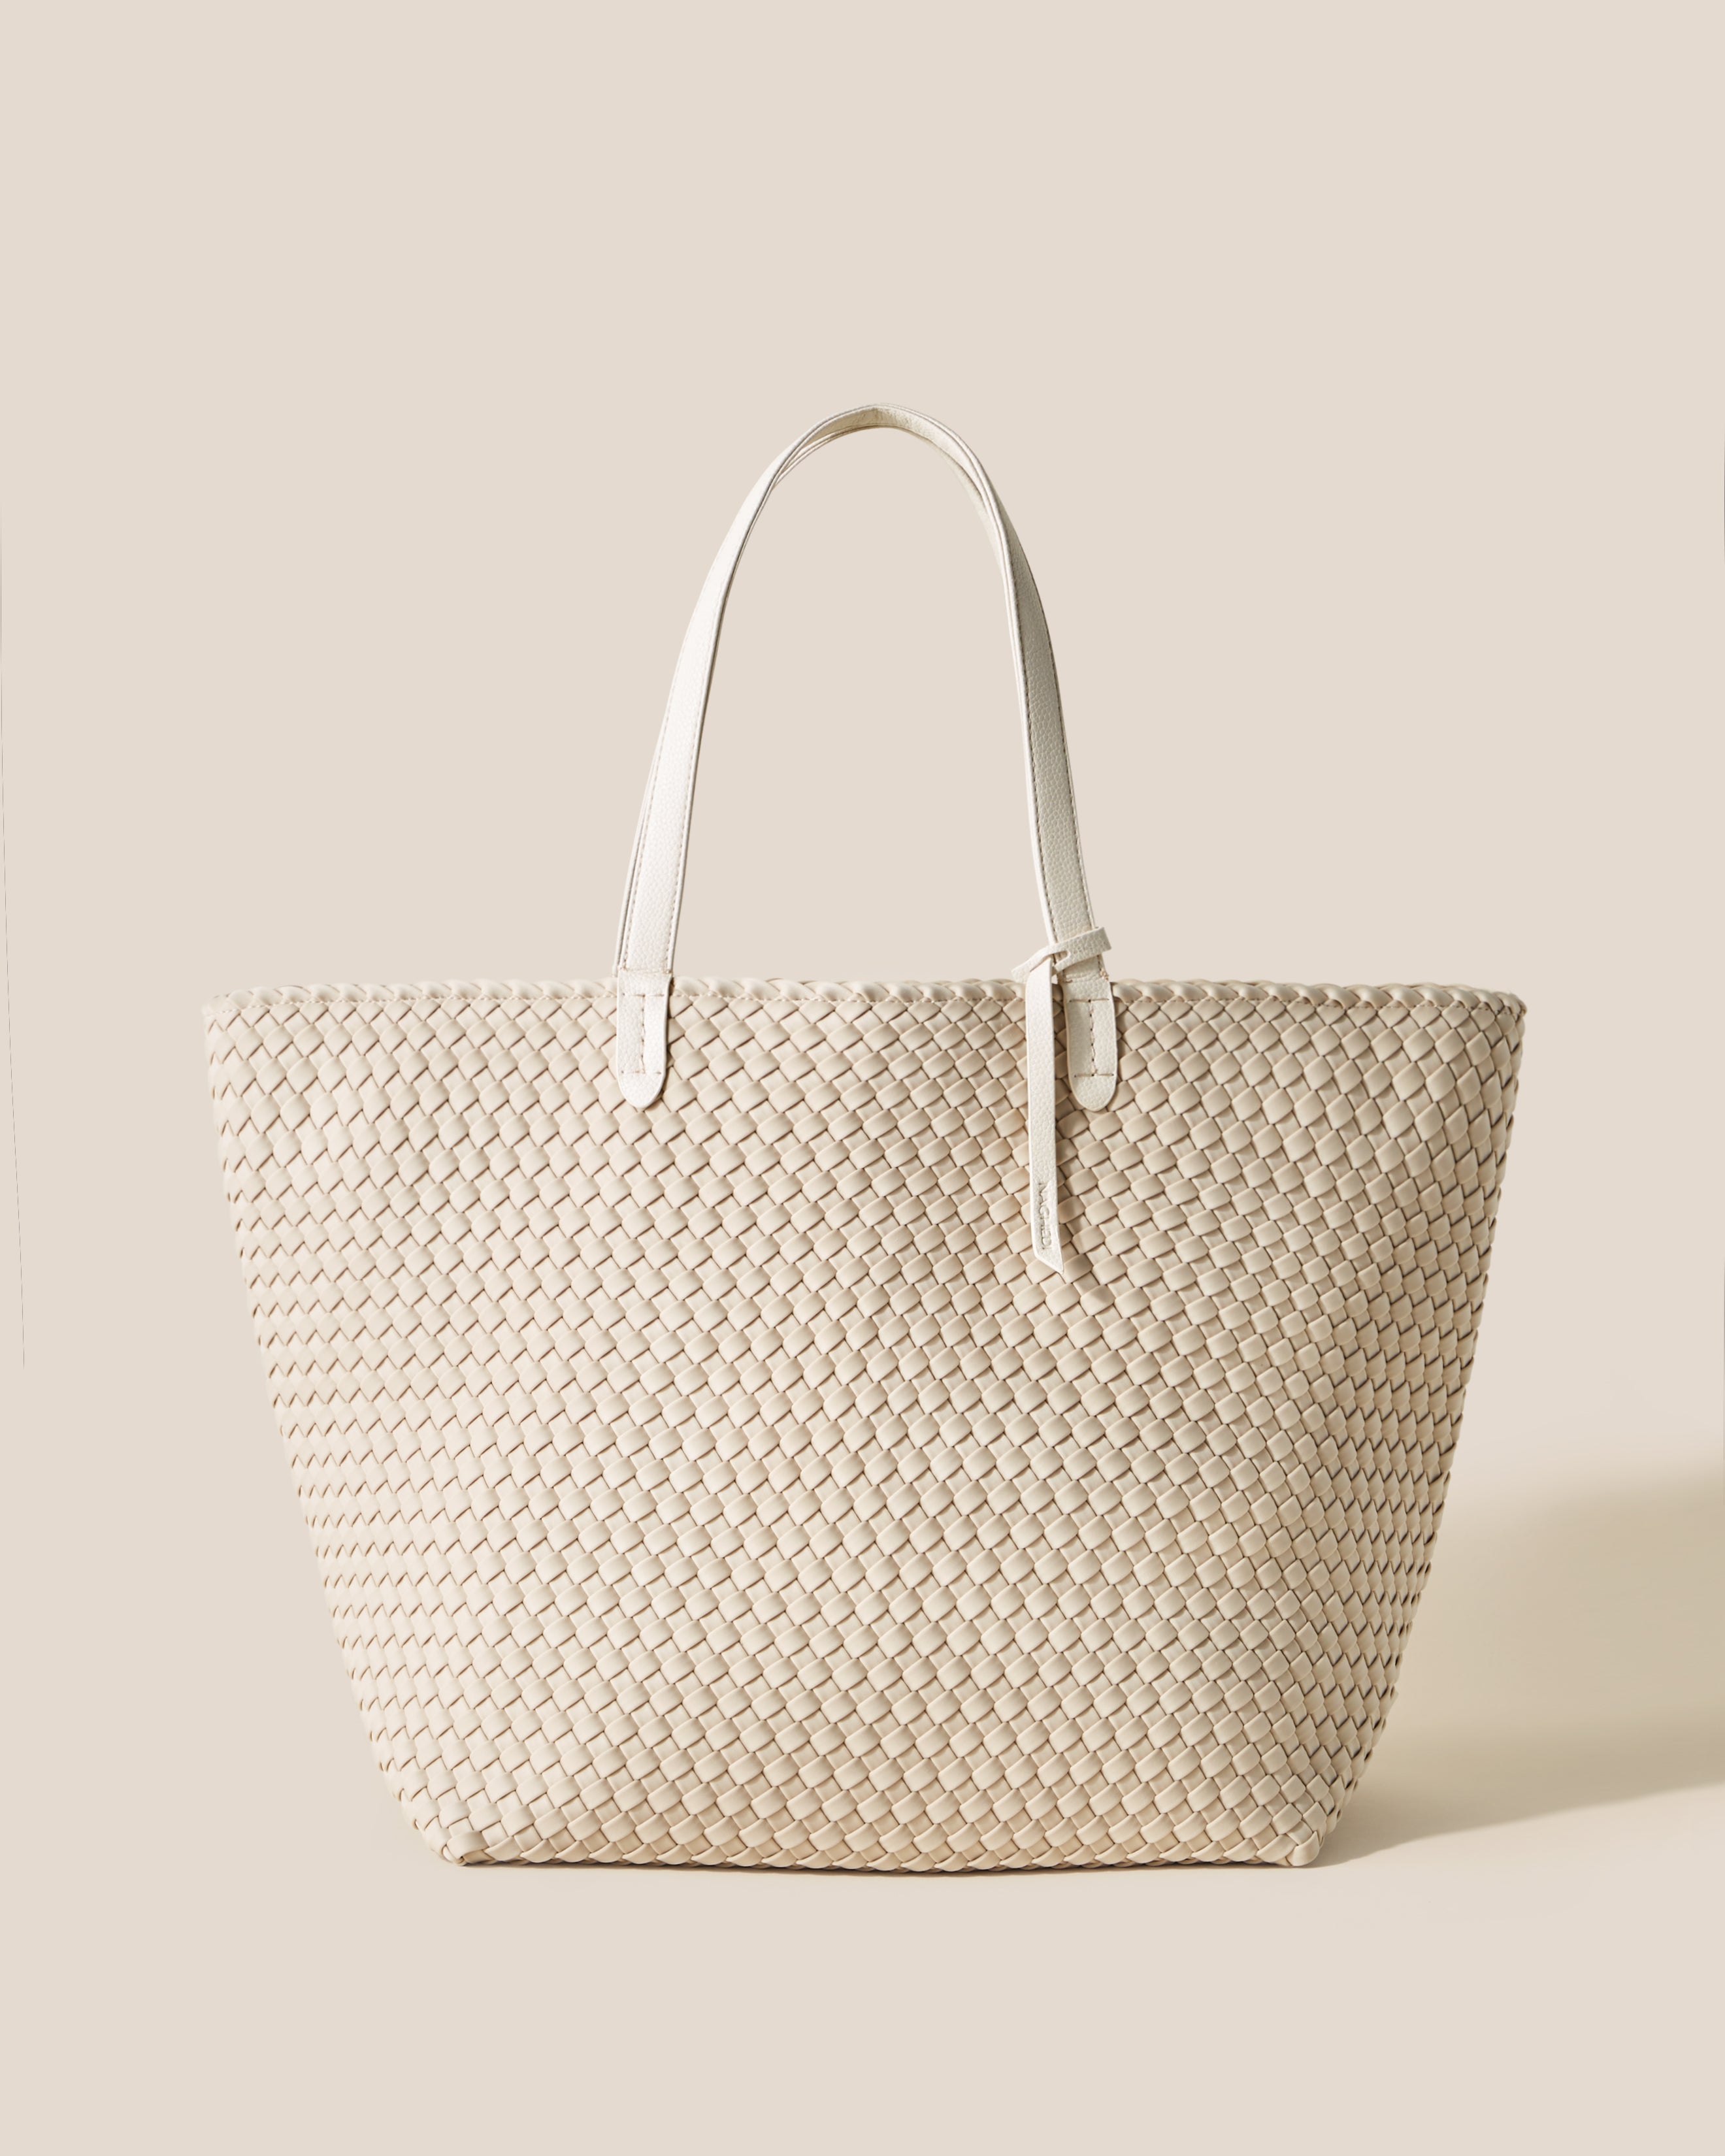 St. Barths – Naghedi NYC  Fashion bags, Bags, Metallic totes